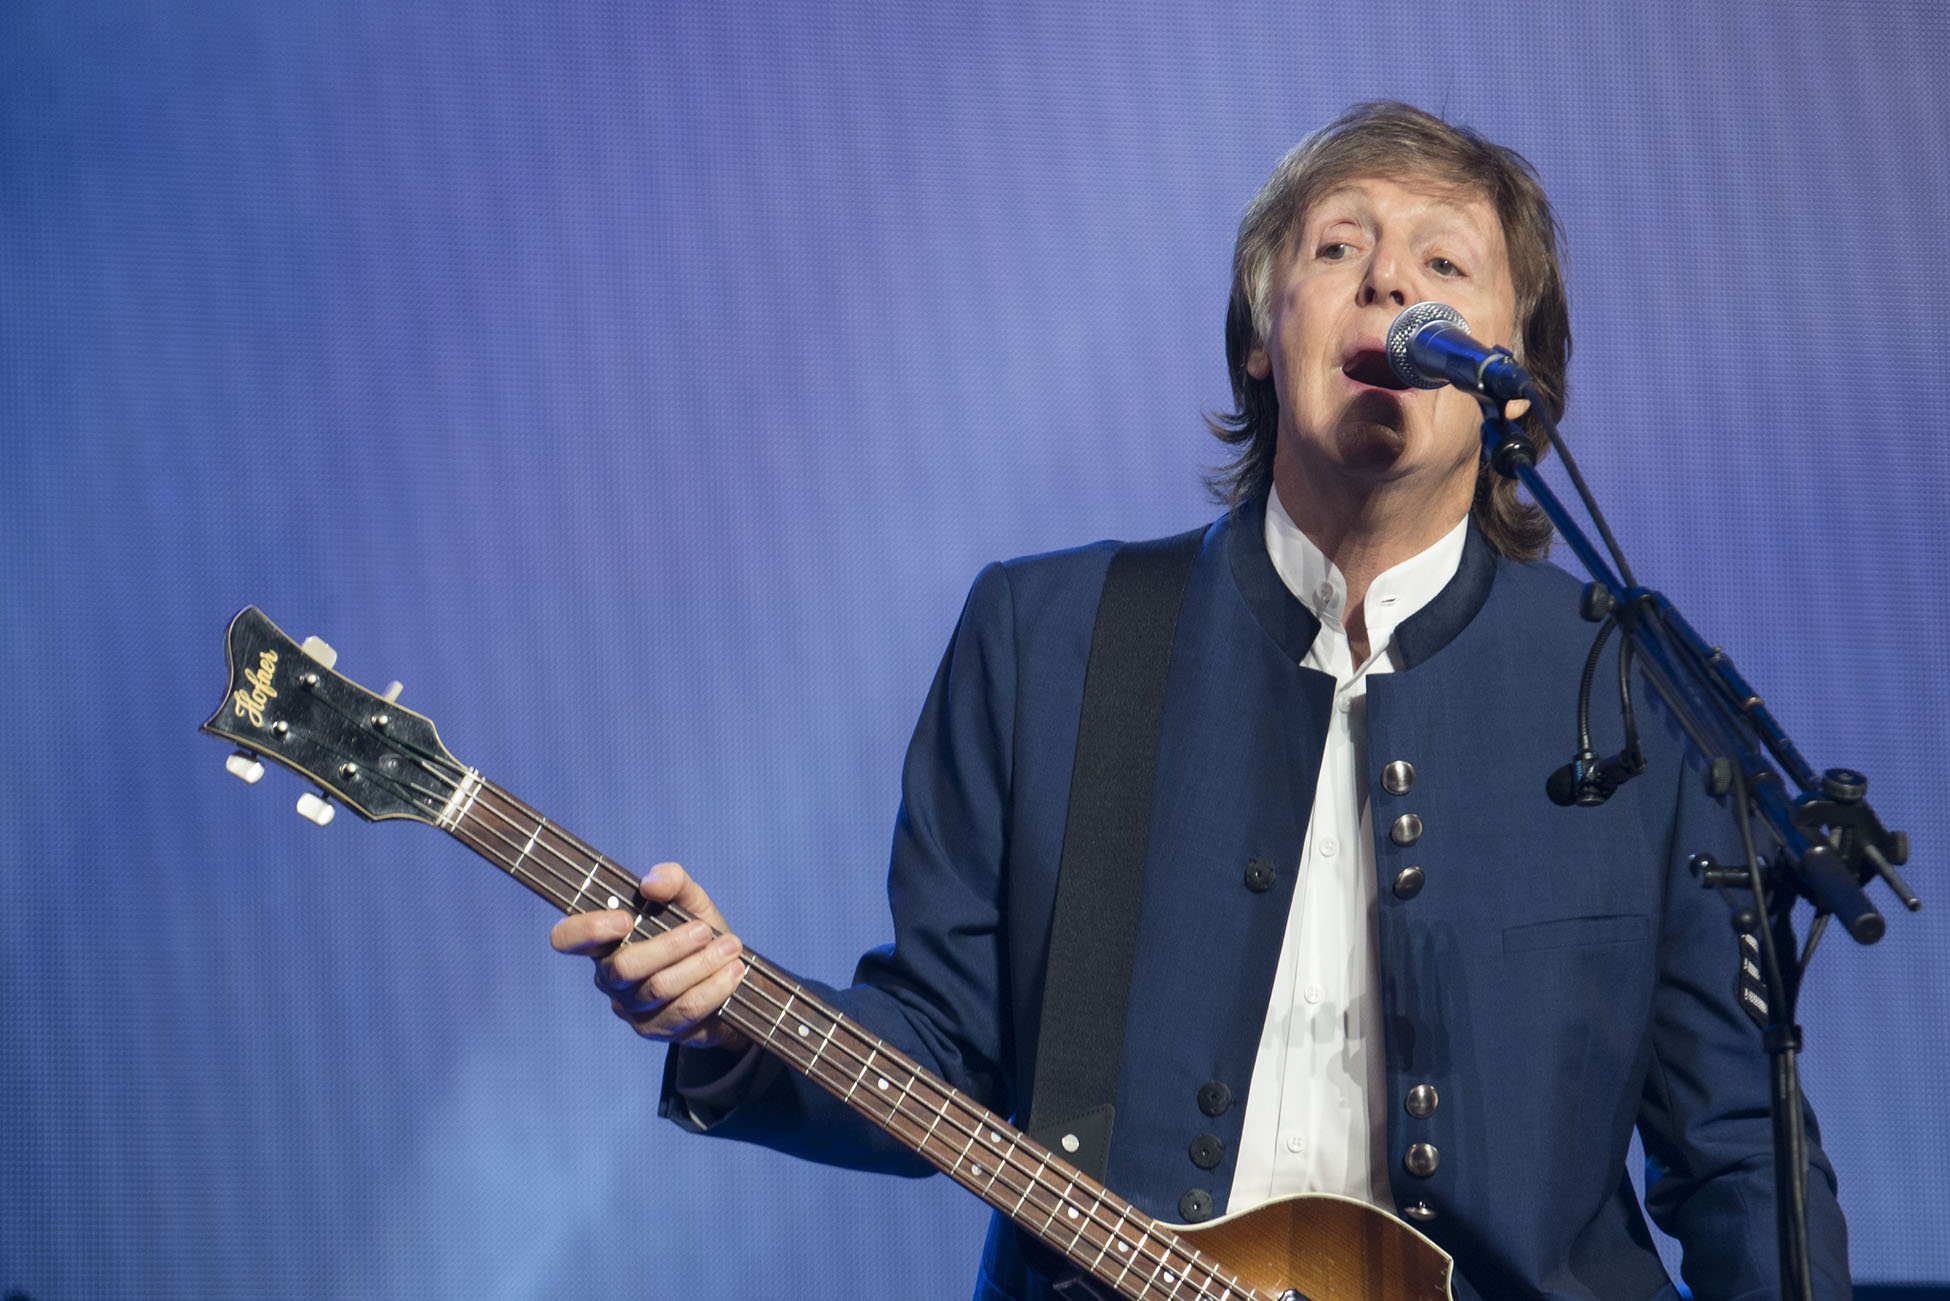 Paul McCartney at the Barclays Center, Brooklyn, NY 9-19-17